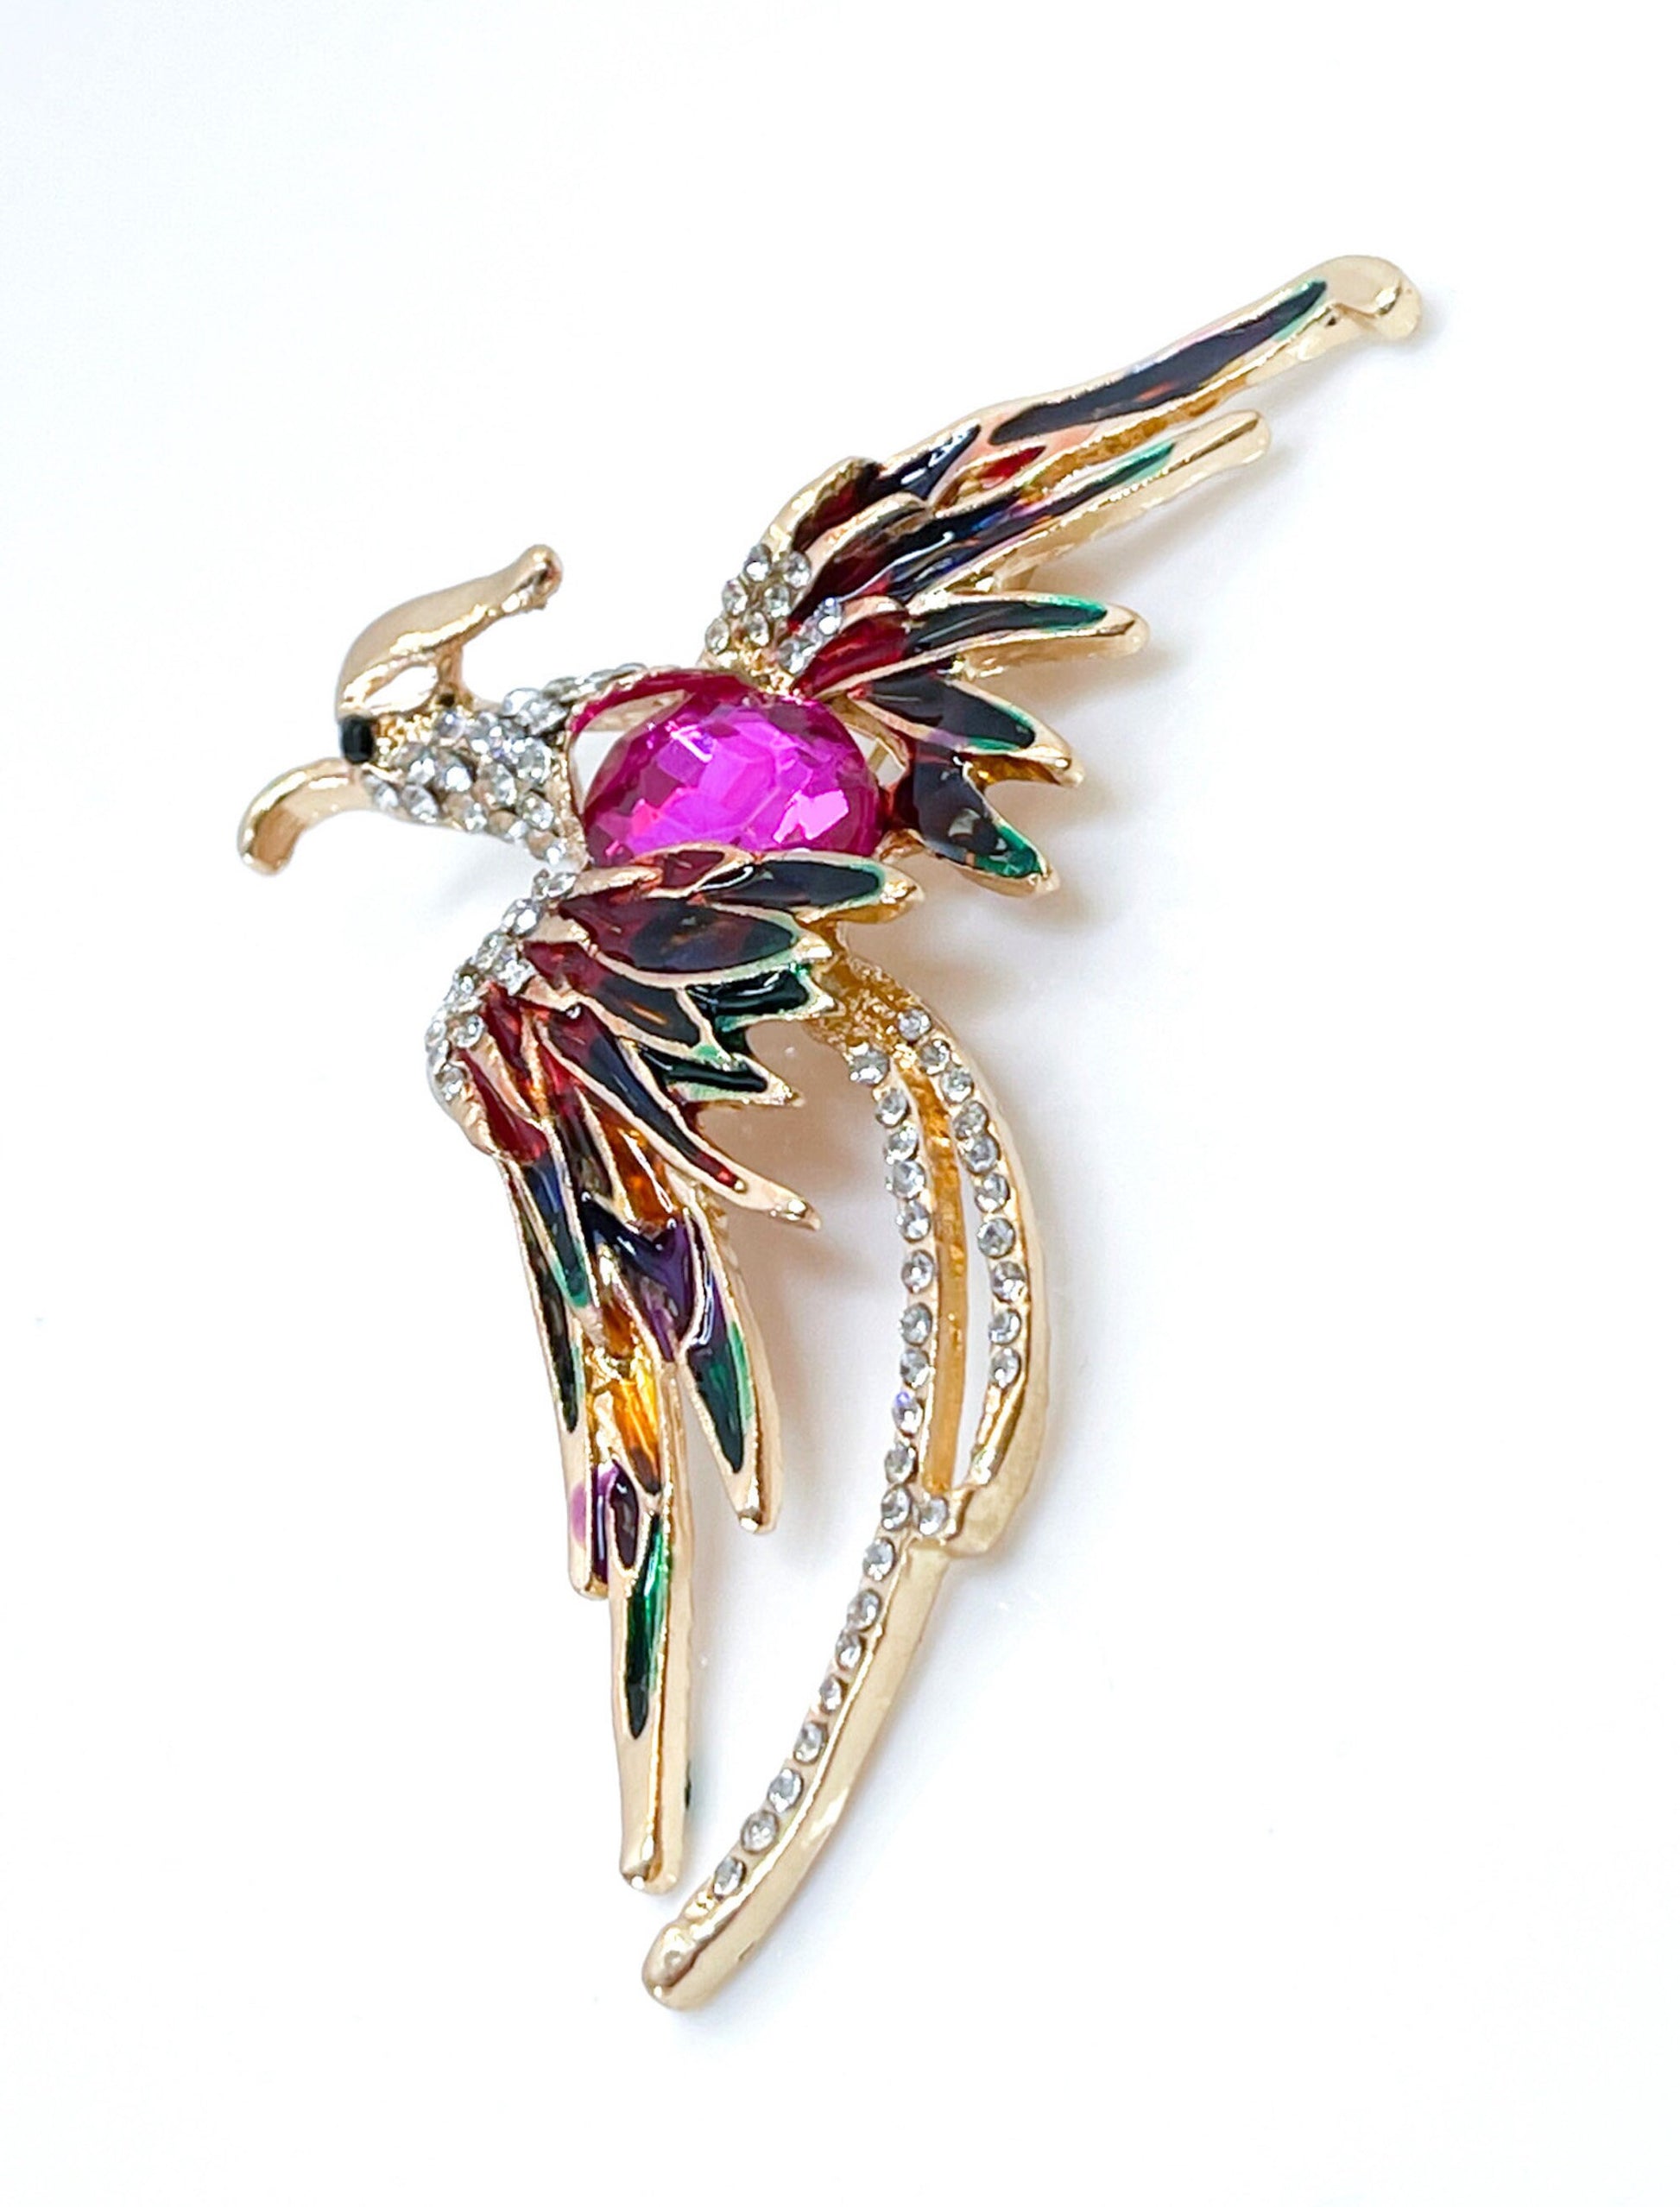 Phoenix Enamel Brooch with Crystal, Fantasy Fashion Brooch, Mythological Bird, Immortal Flame Bird, Brooches for Women, Unisex Pin